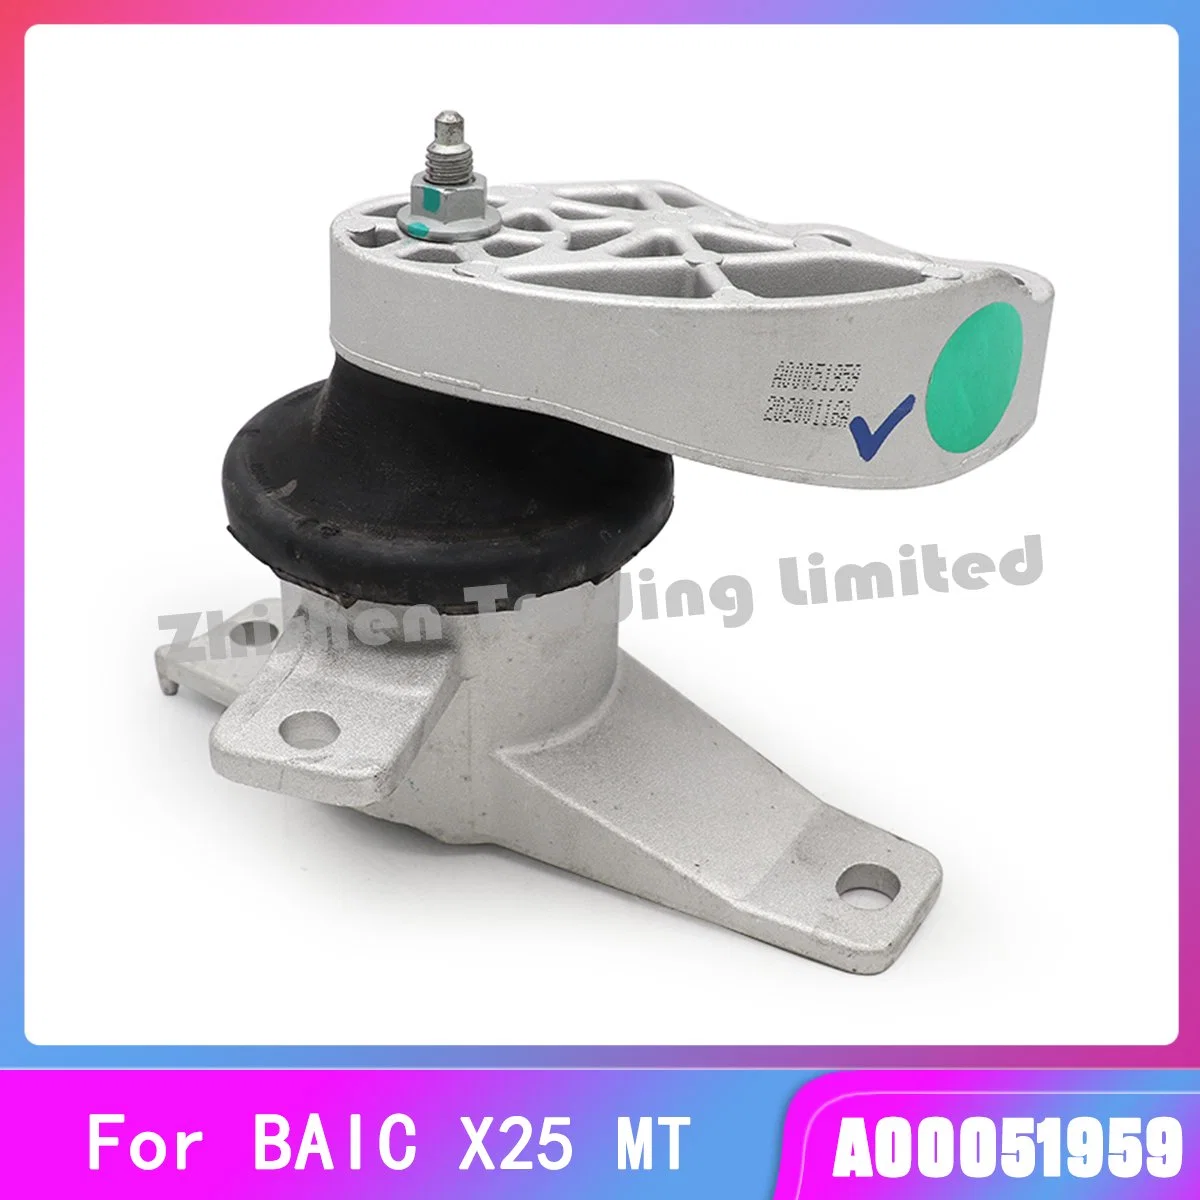 Baic Auto Spare Part Auto Accessory for Shenbao X25 at Mt Engine Left Right Suspension Bracket Pawl Pad Suspension Foot Pad Bracket Manual Automatic